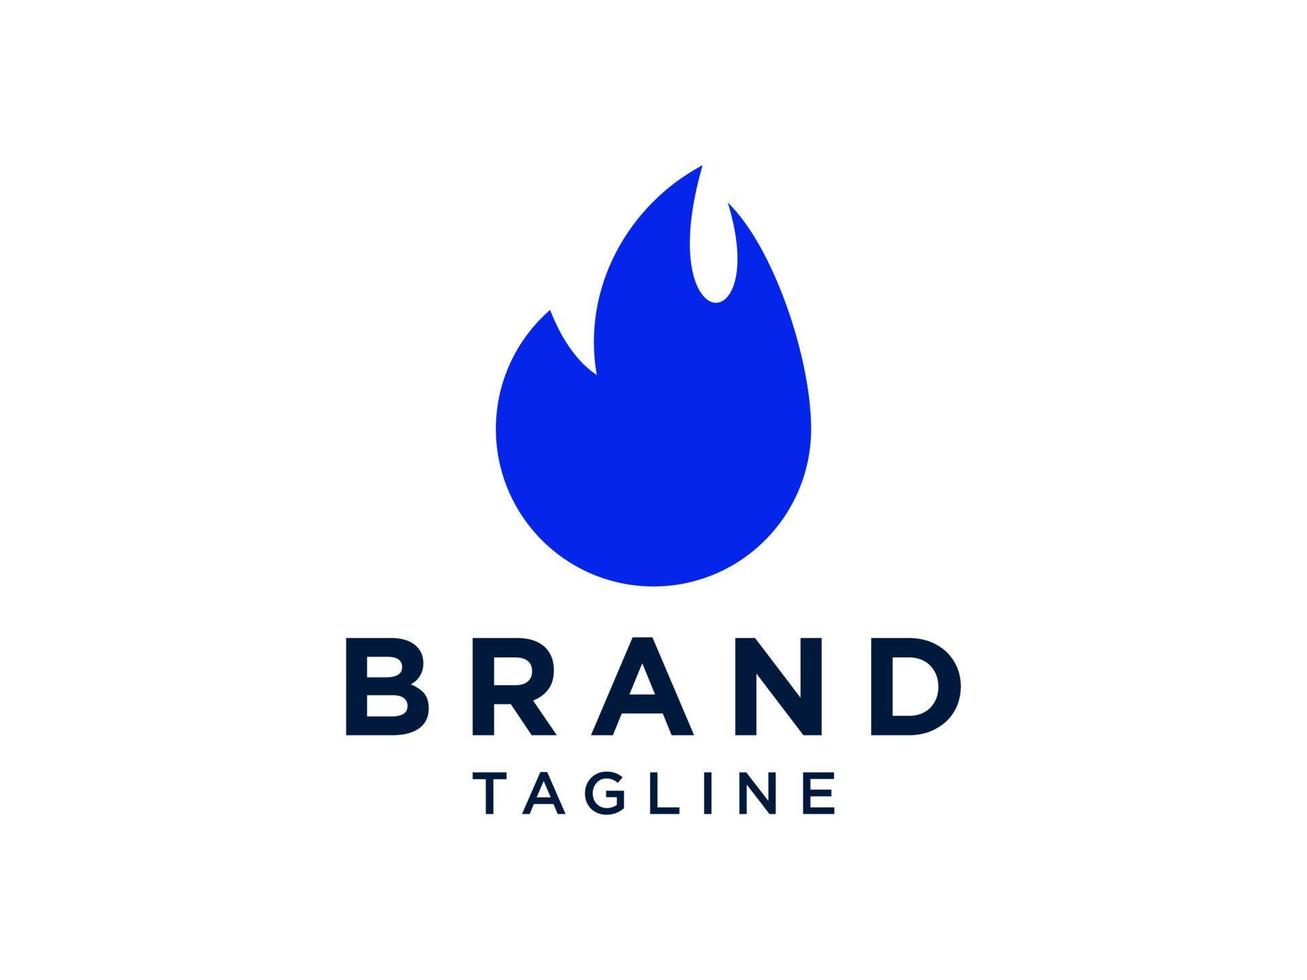 símbolo de fogo ícone quente com rótulo adesivo azul isolado no fundo branco. elemento de modelo de design de ícone de vetor plano para web.